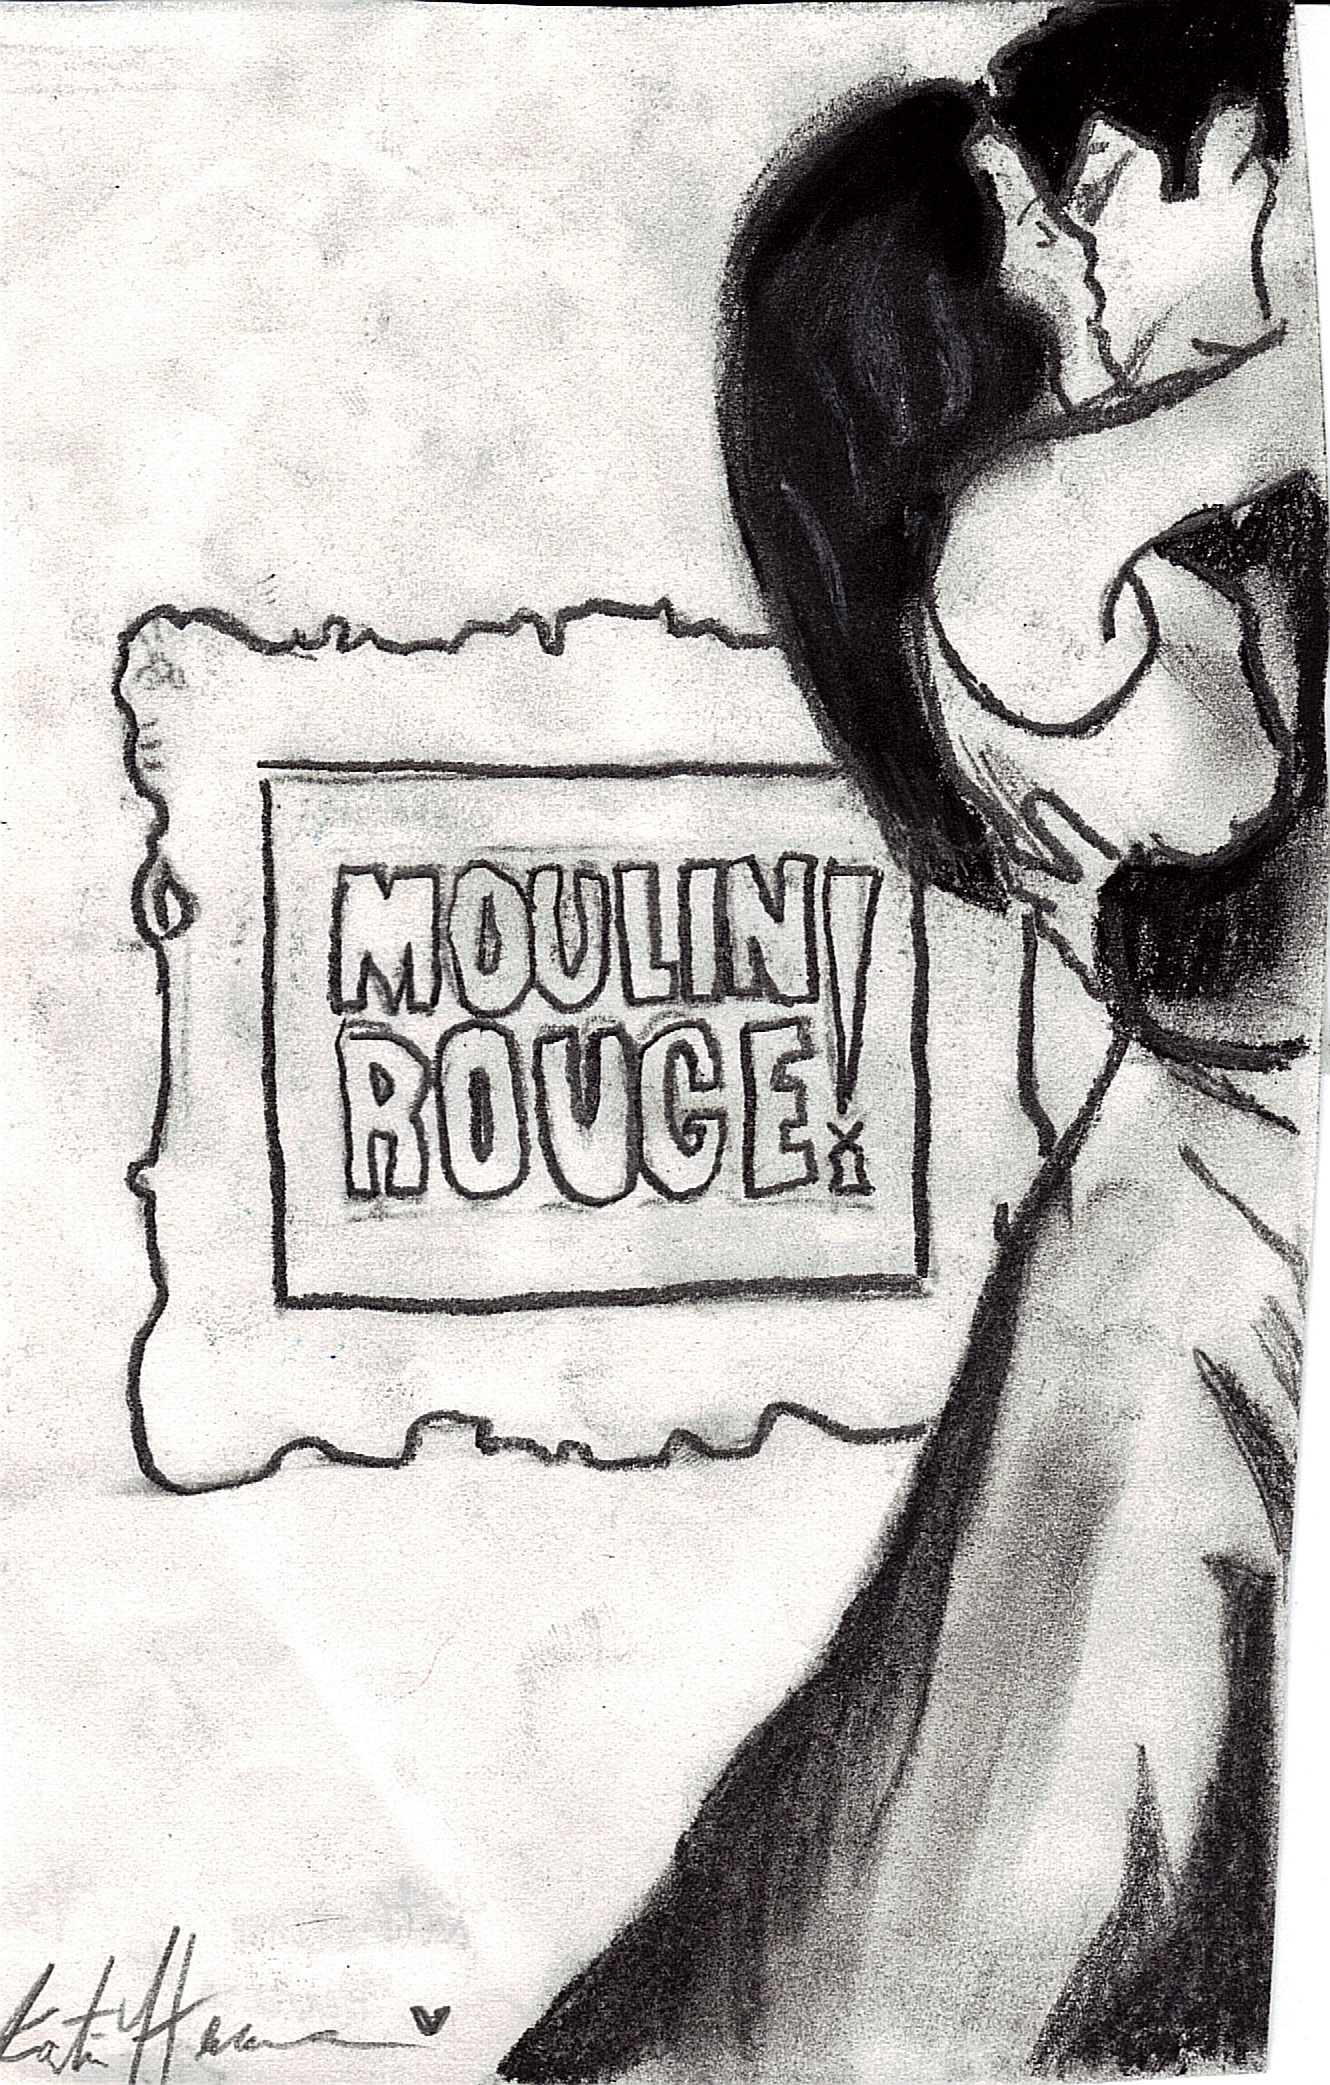 Moulin Rouge! cover by littlemissmorbid